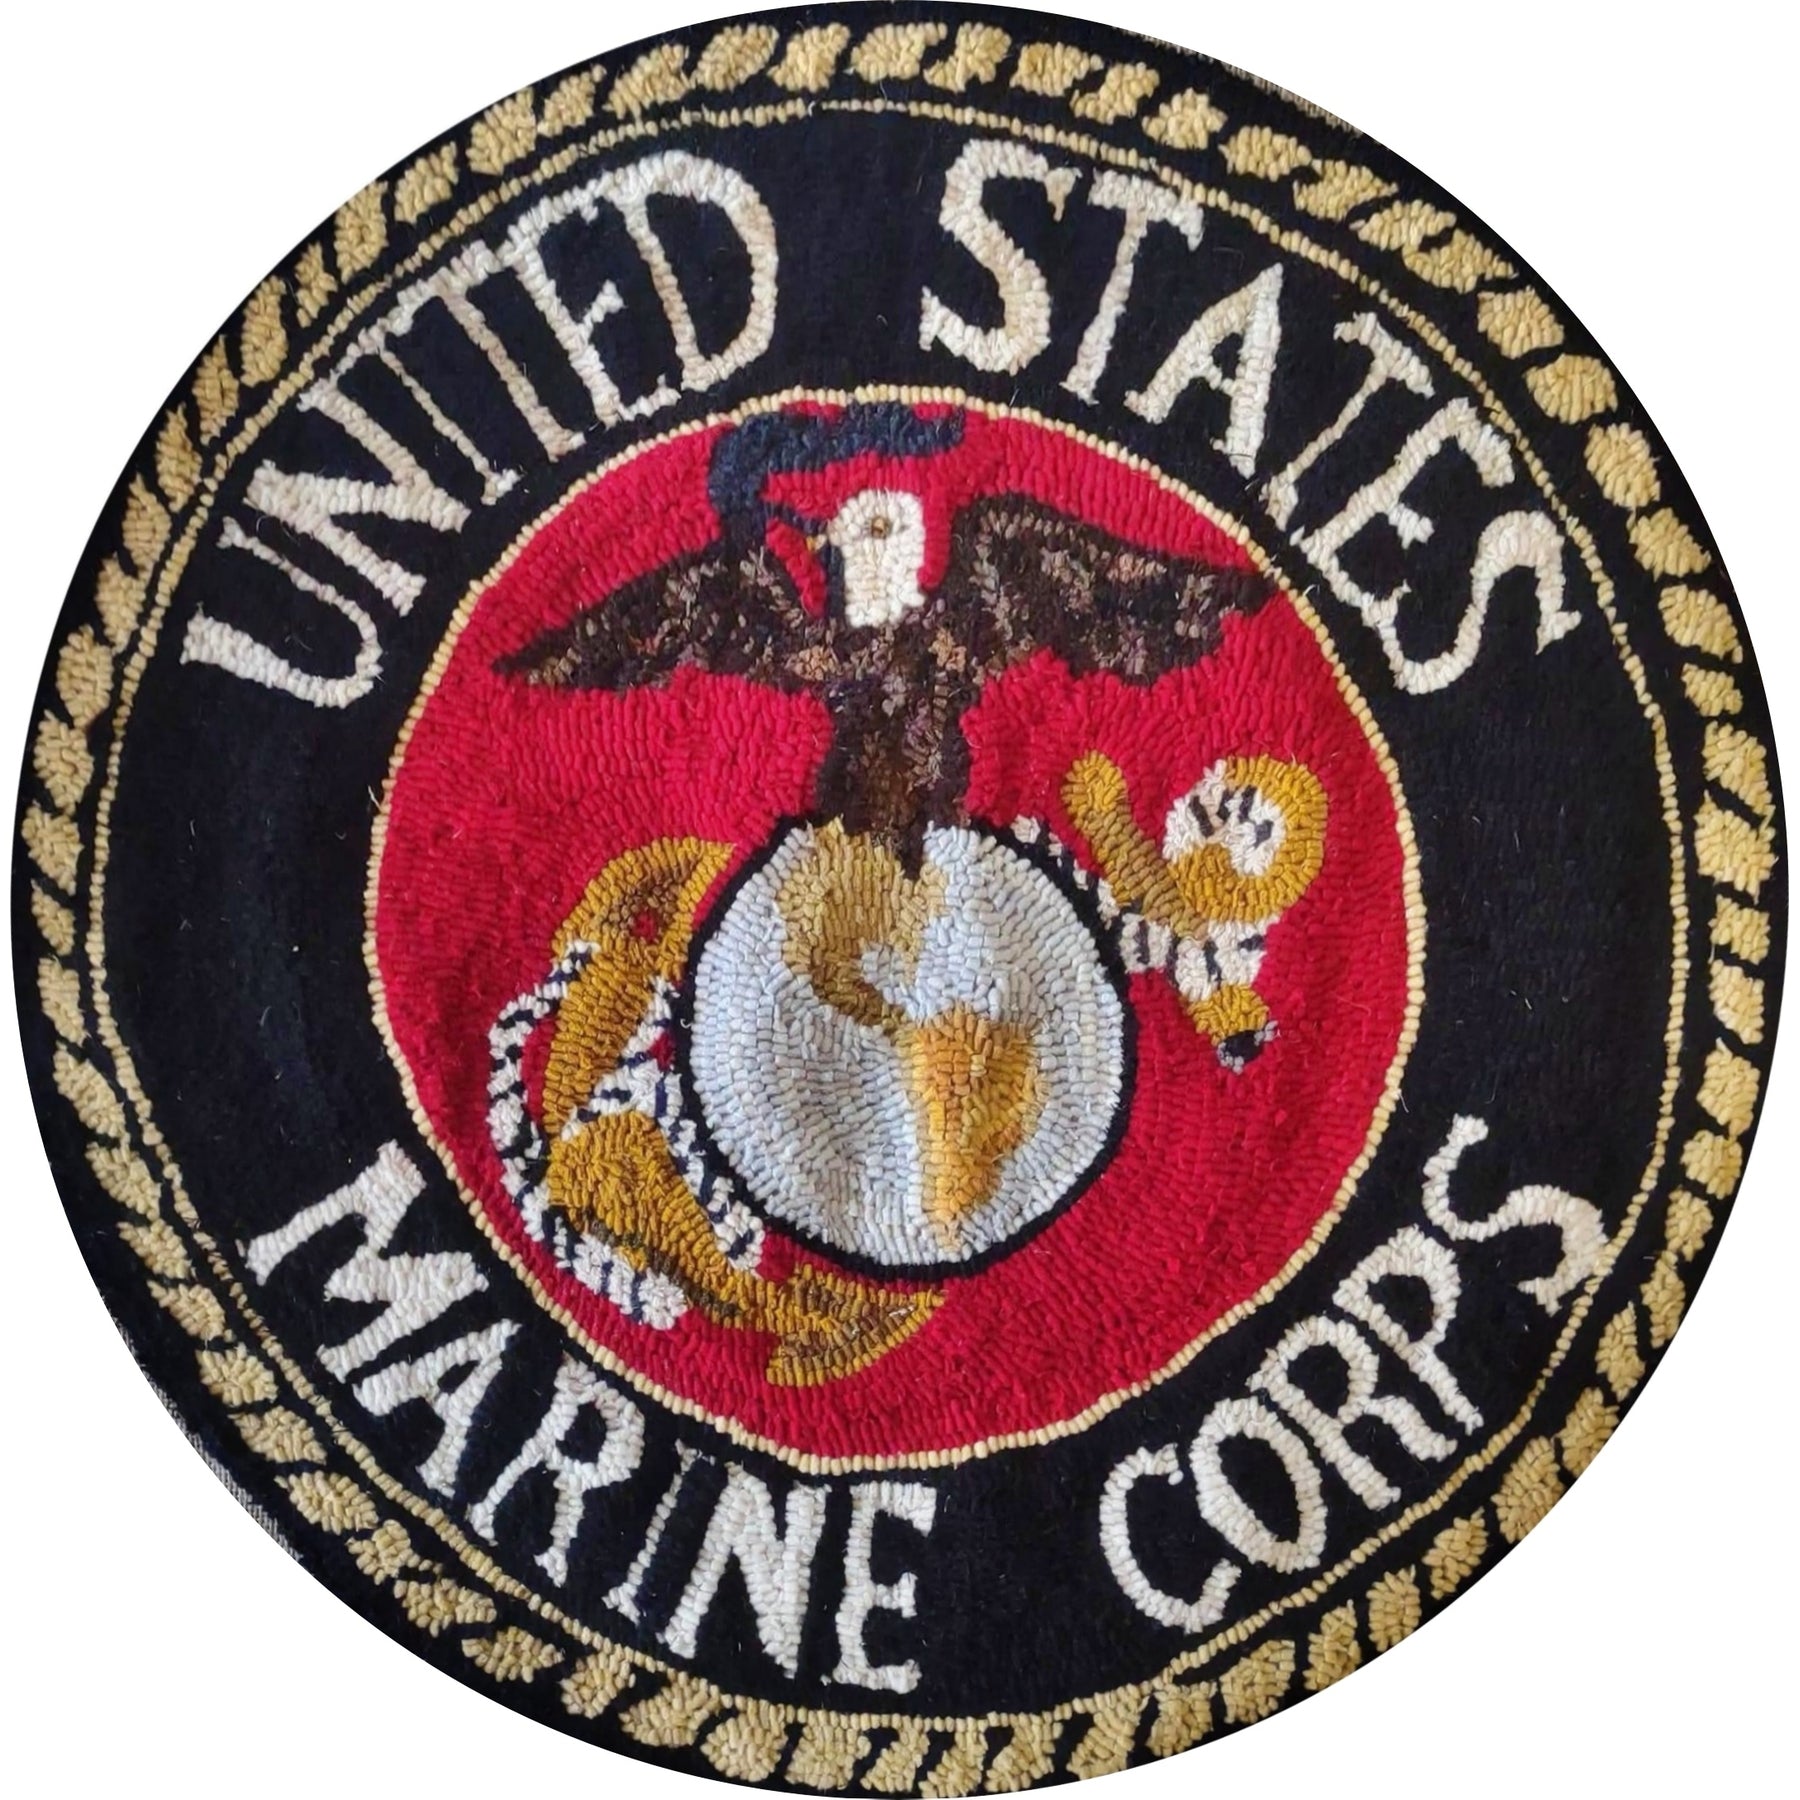 U.S. Marine Corps Insignia, rug hooked by Billie Herringshaw